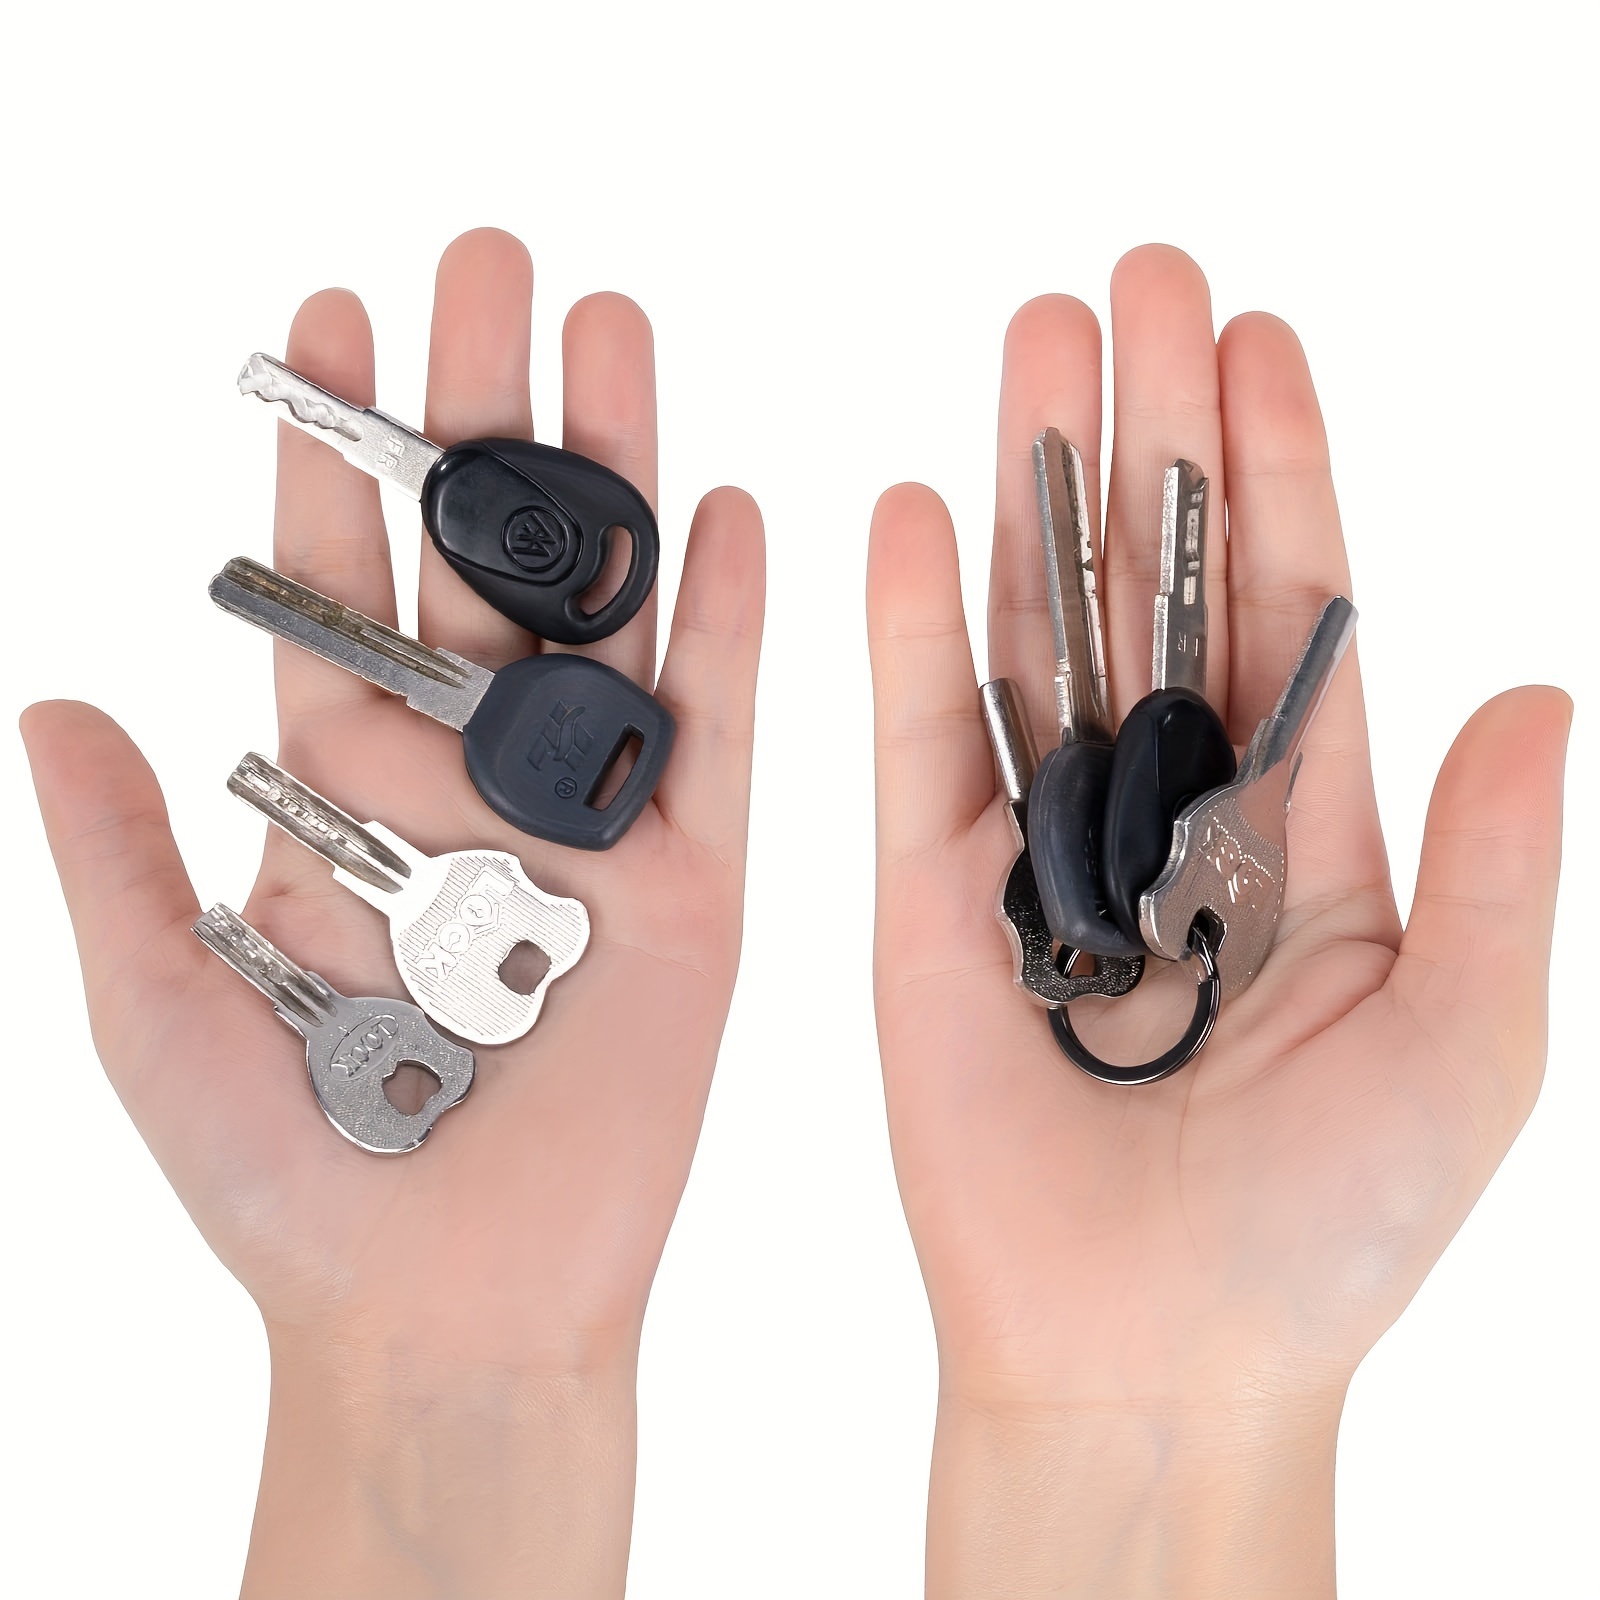 10pcs Heavy Duty Key Rings, Metal Key Rings Round Split Key Rings Bulk for Keychains Key Chain Rings,Temu